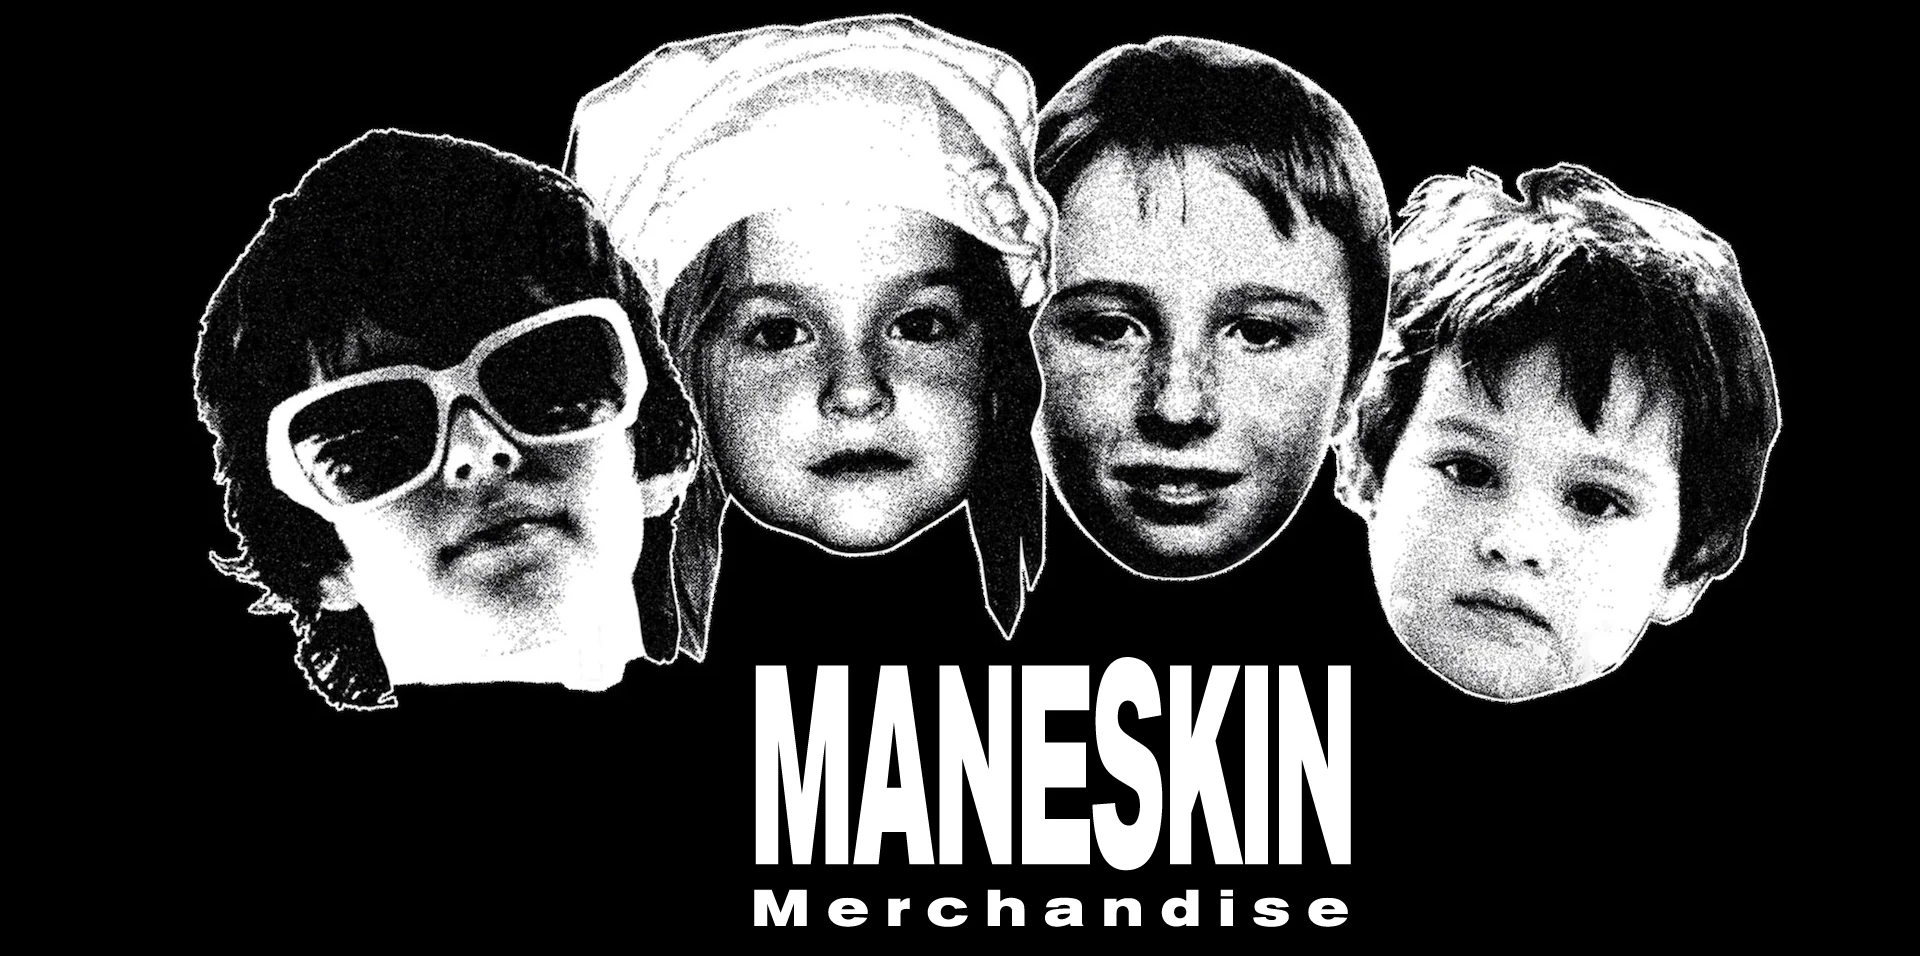 Image of the Måneskin group when children